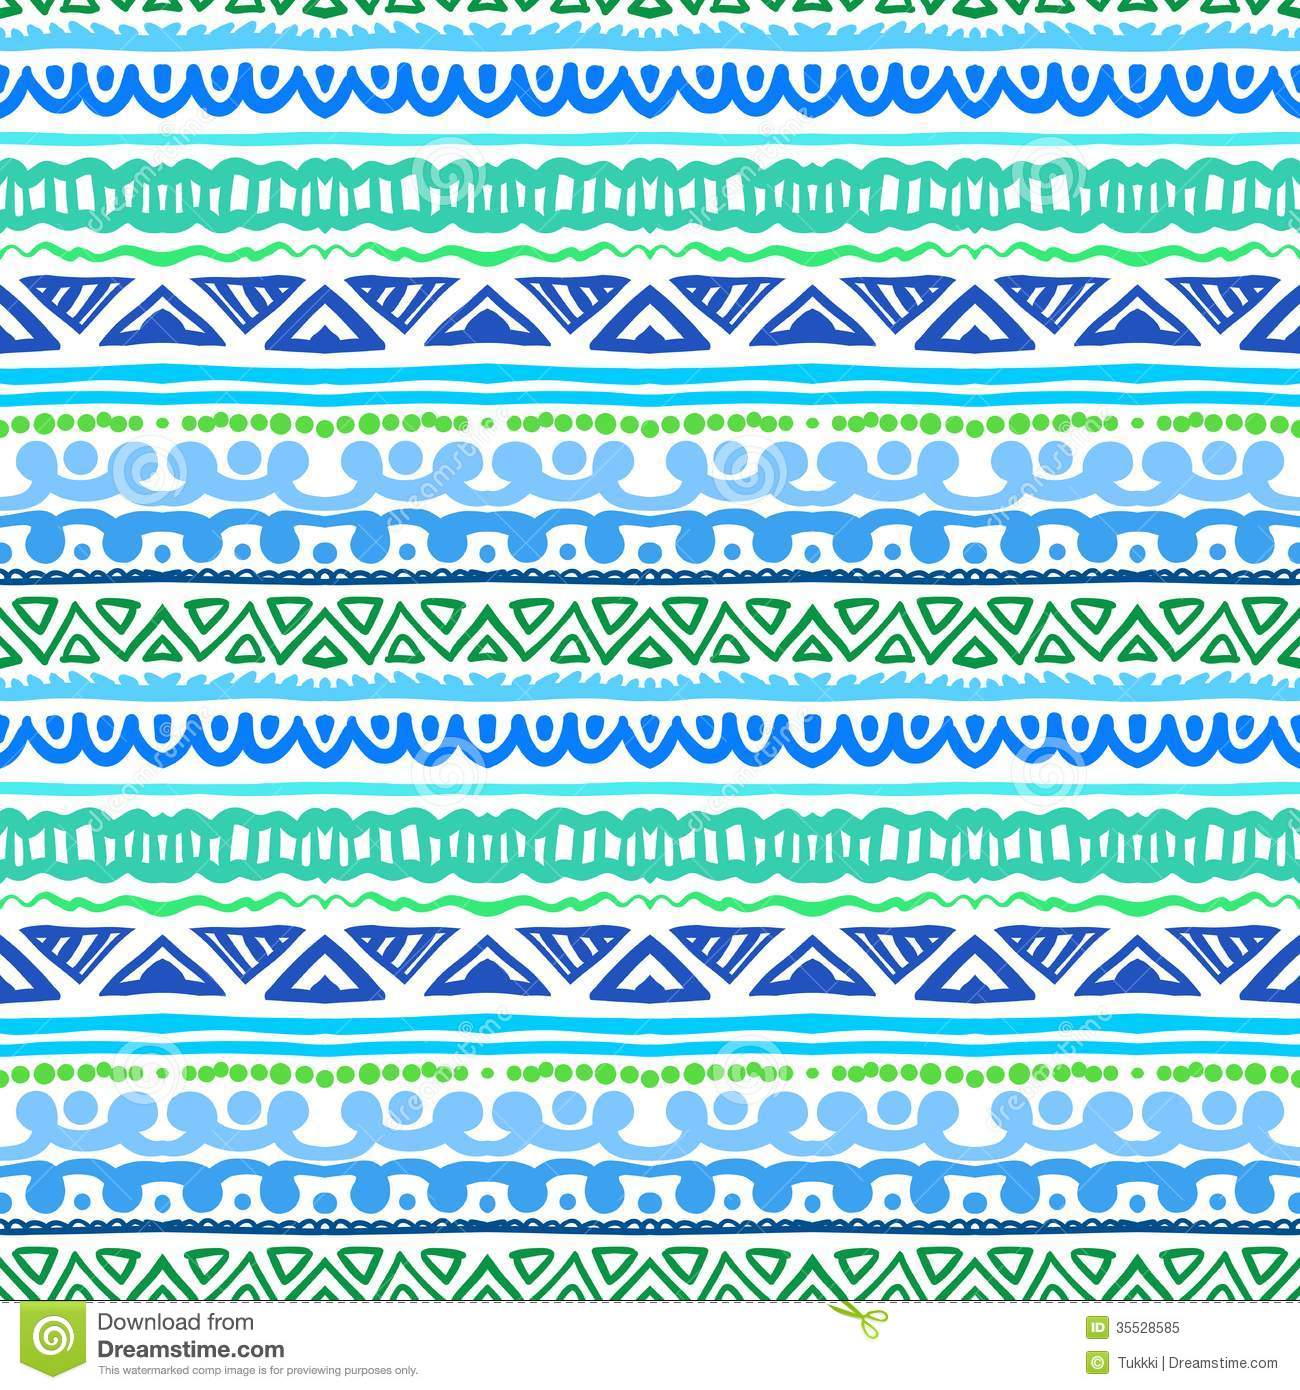 Tribal Print Pattern Wallpaper Striped Ethnic In Vibrant Blue